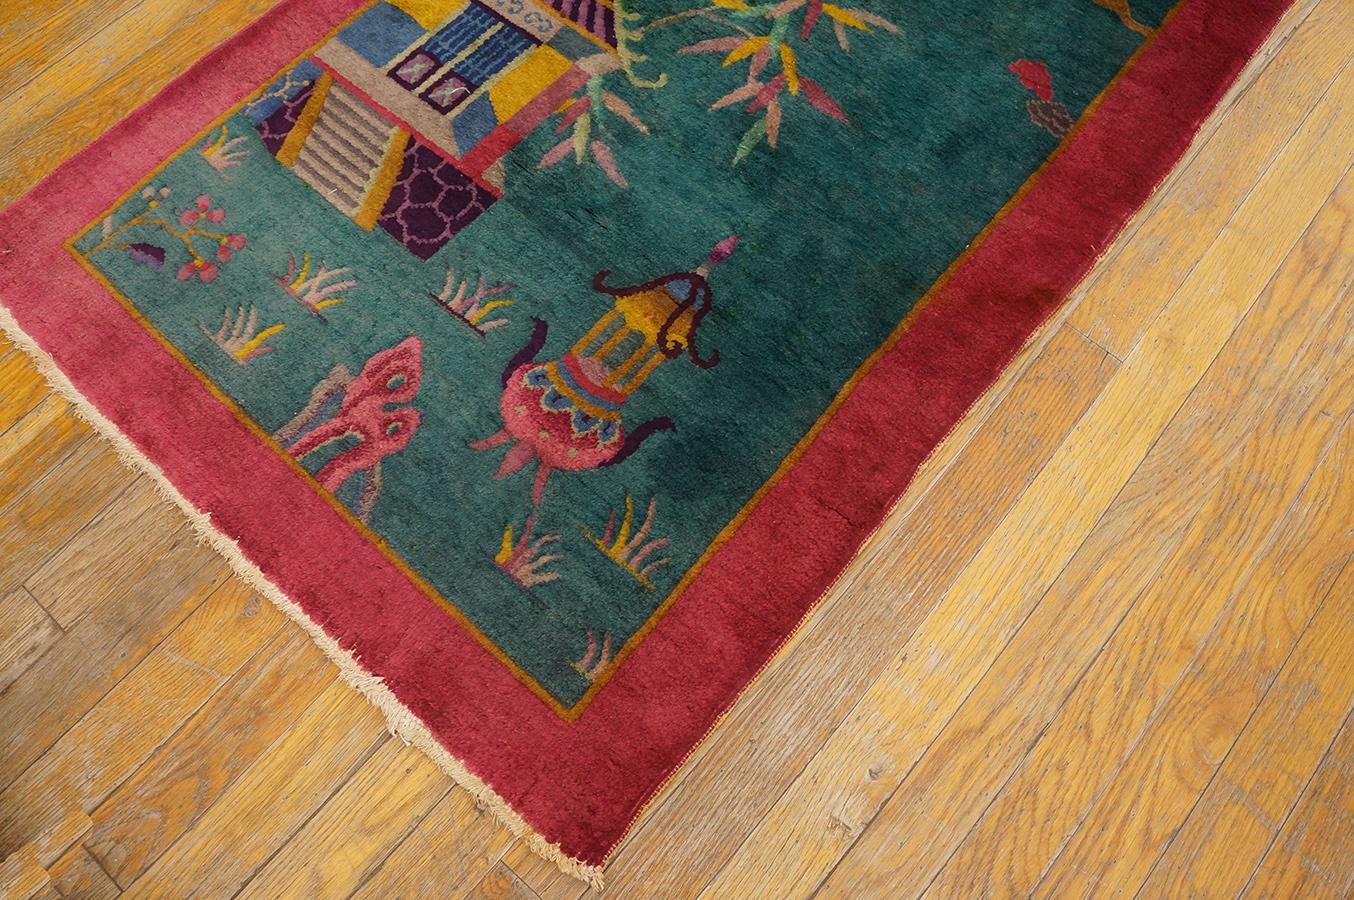 1920s Chinese Art Deco Carpet ( 2' 6'' x 4' 5'' - 76 x 134 cm ) For Sale 1